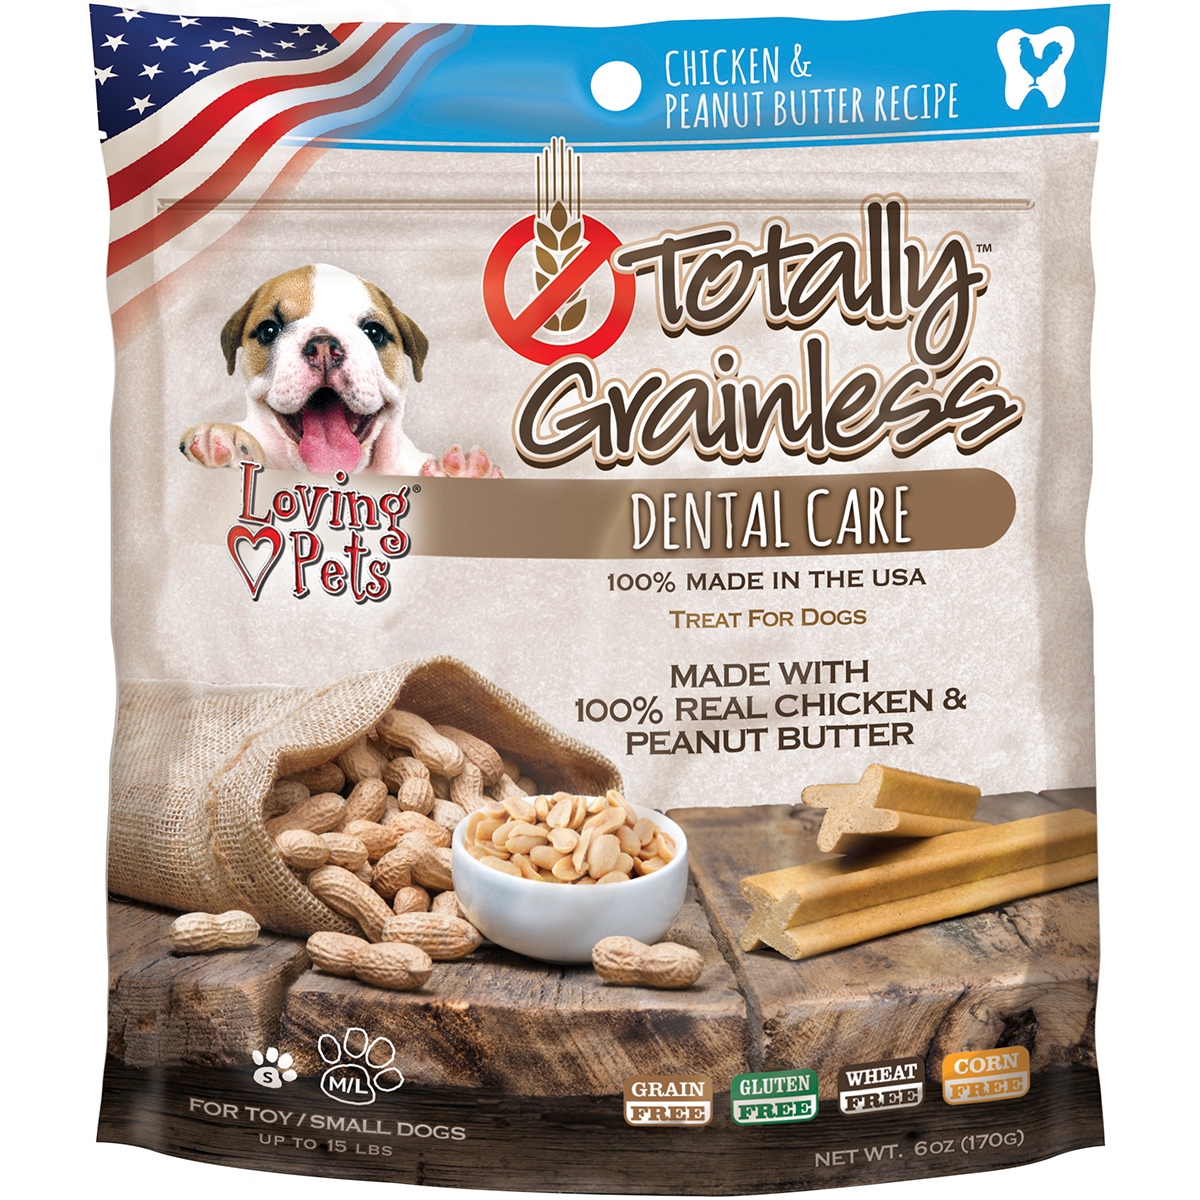 Lp5305 Totally Grainless Dental Bones For Small Dogs Chicken & Peanut Butter - 6 Oz.